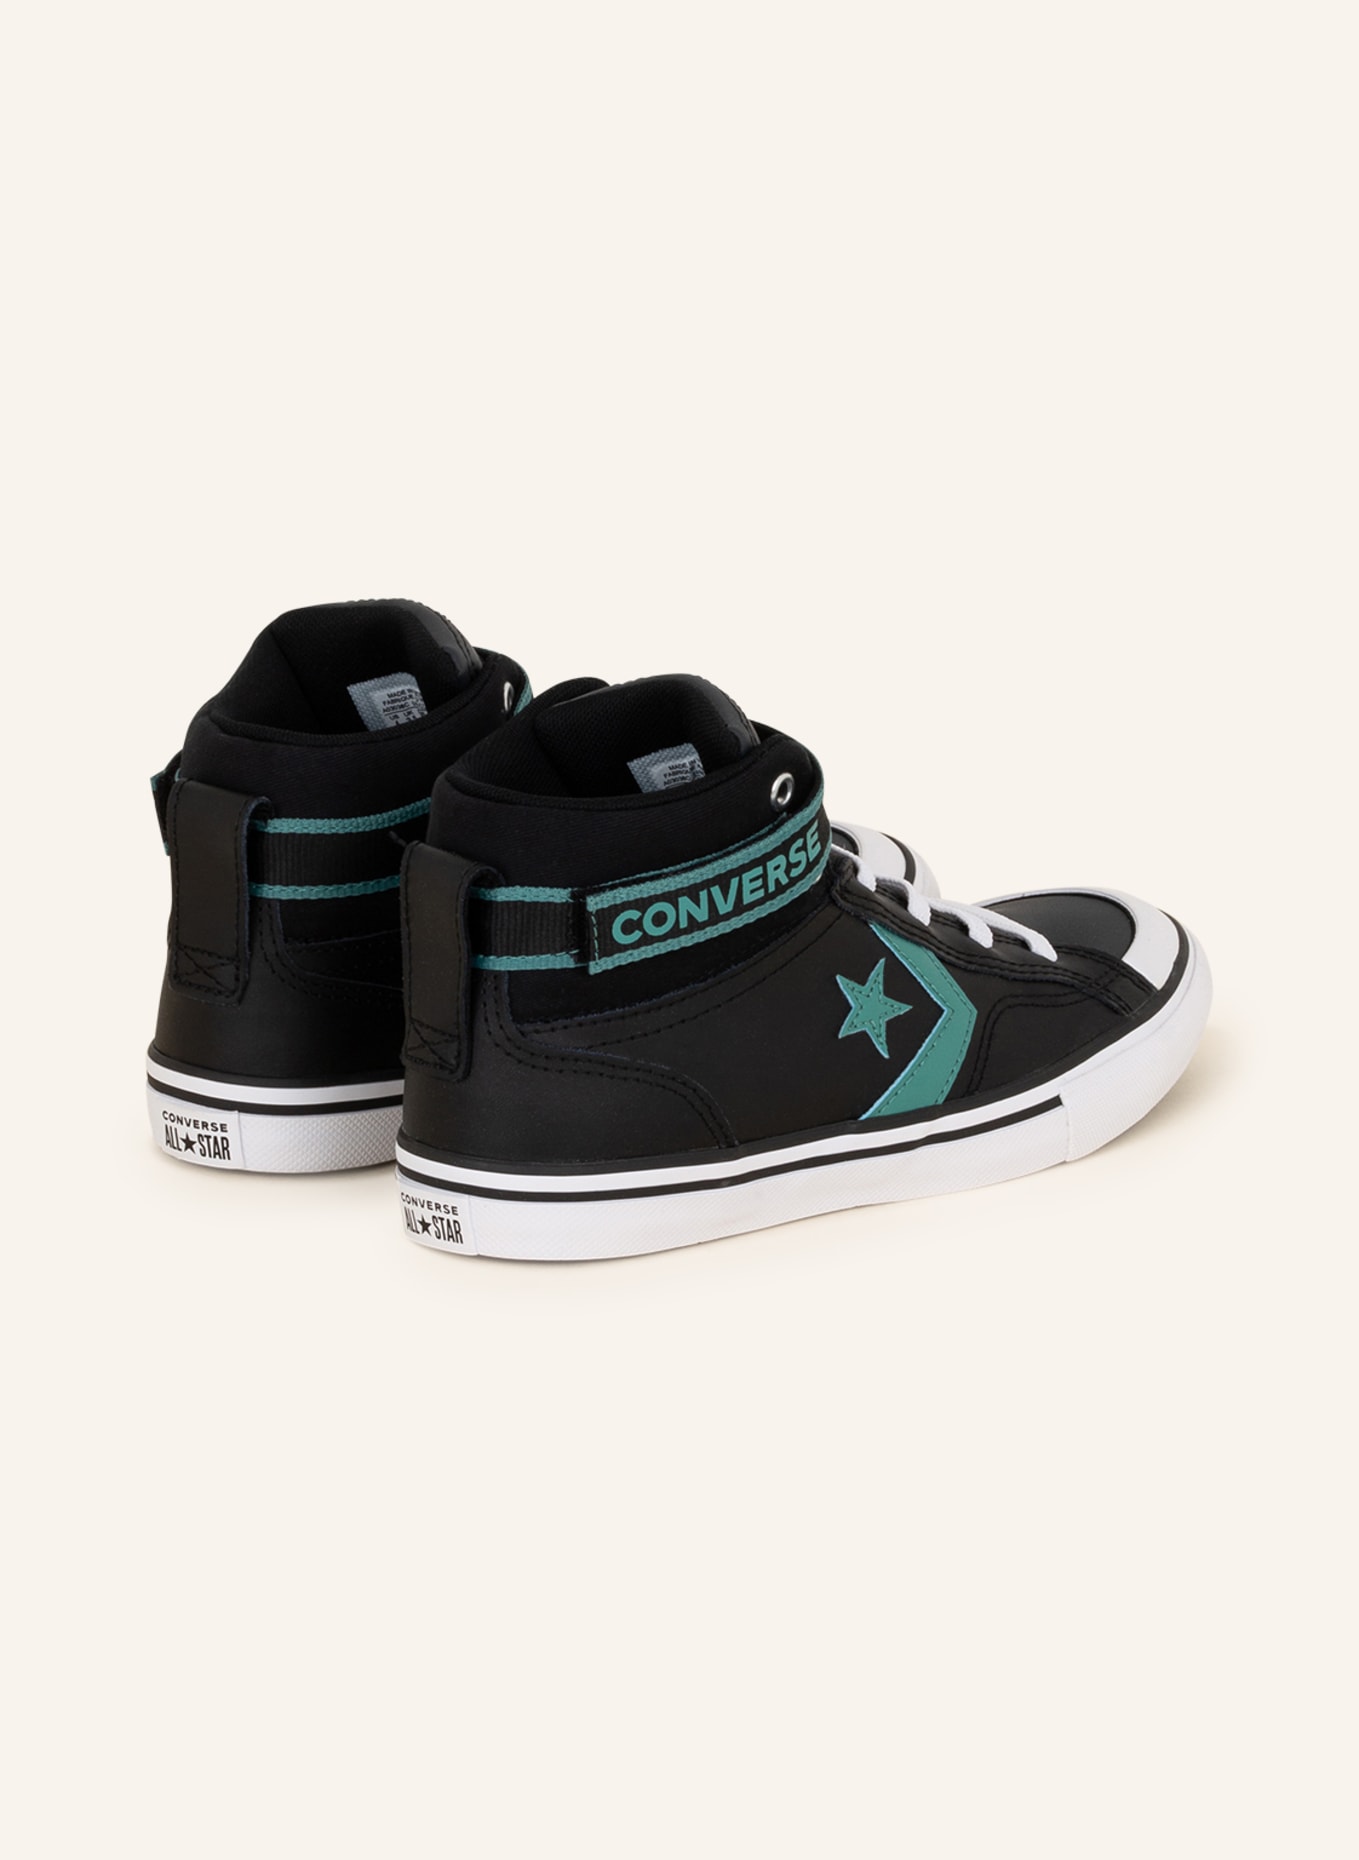 CONVERSE Hightop-Sneaker PRO BLAZE in schwarz/ grün